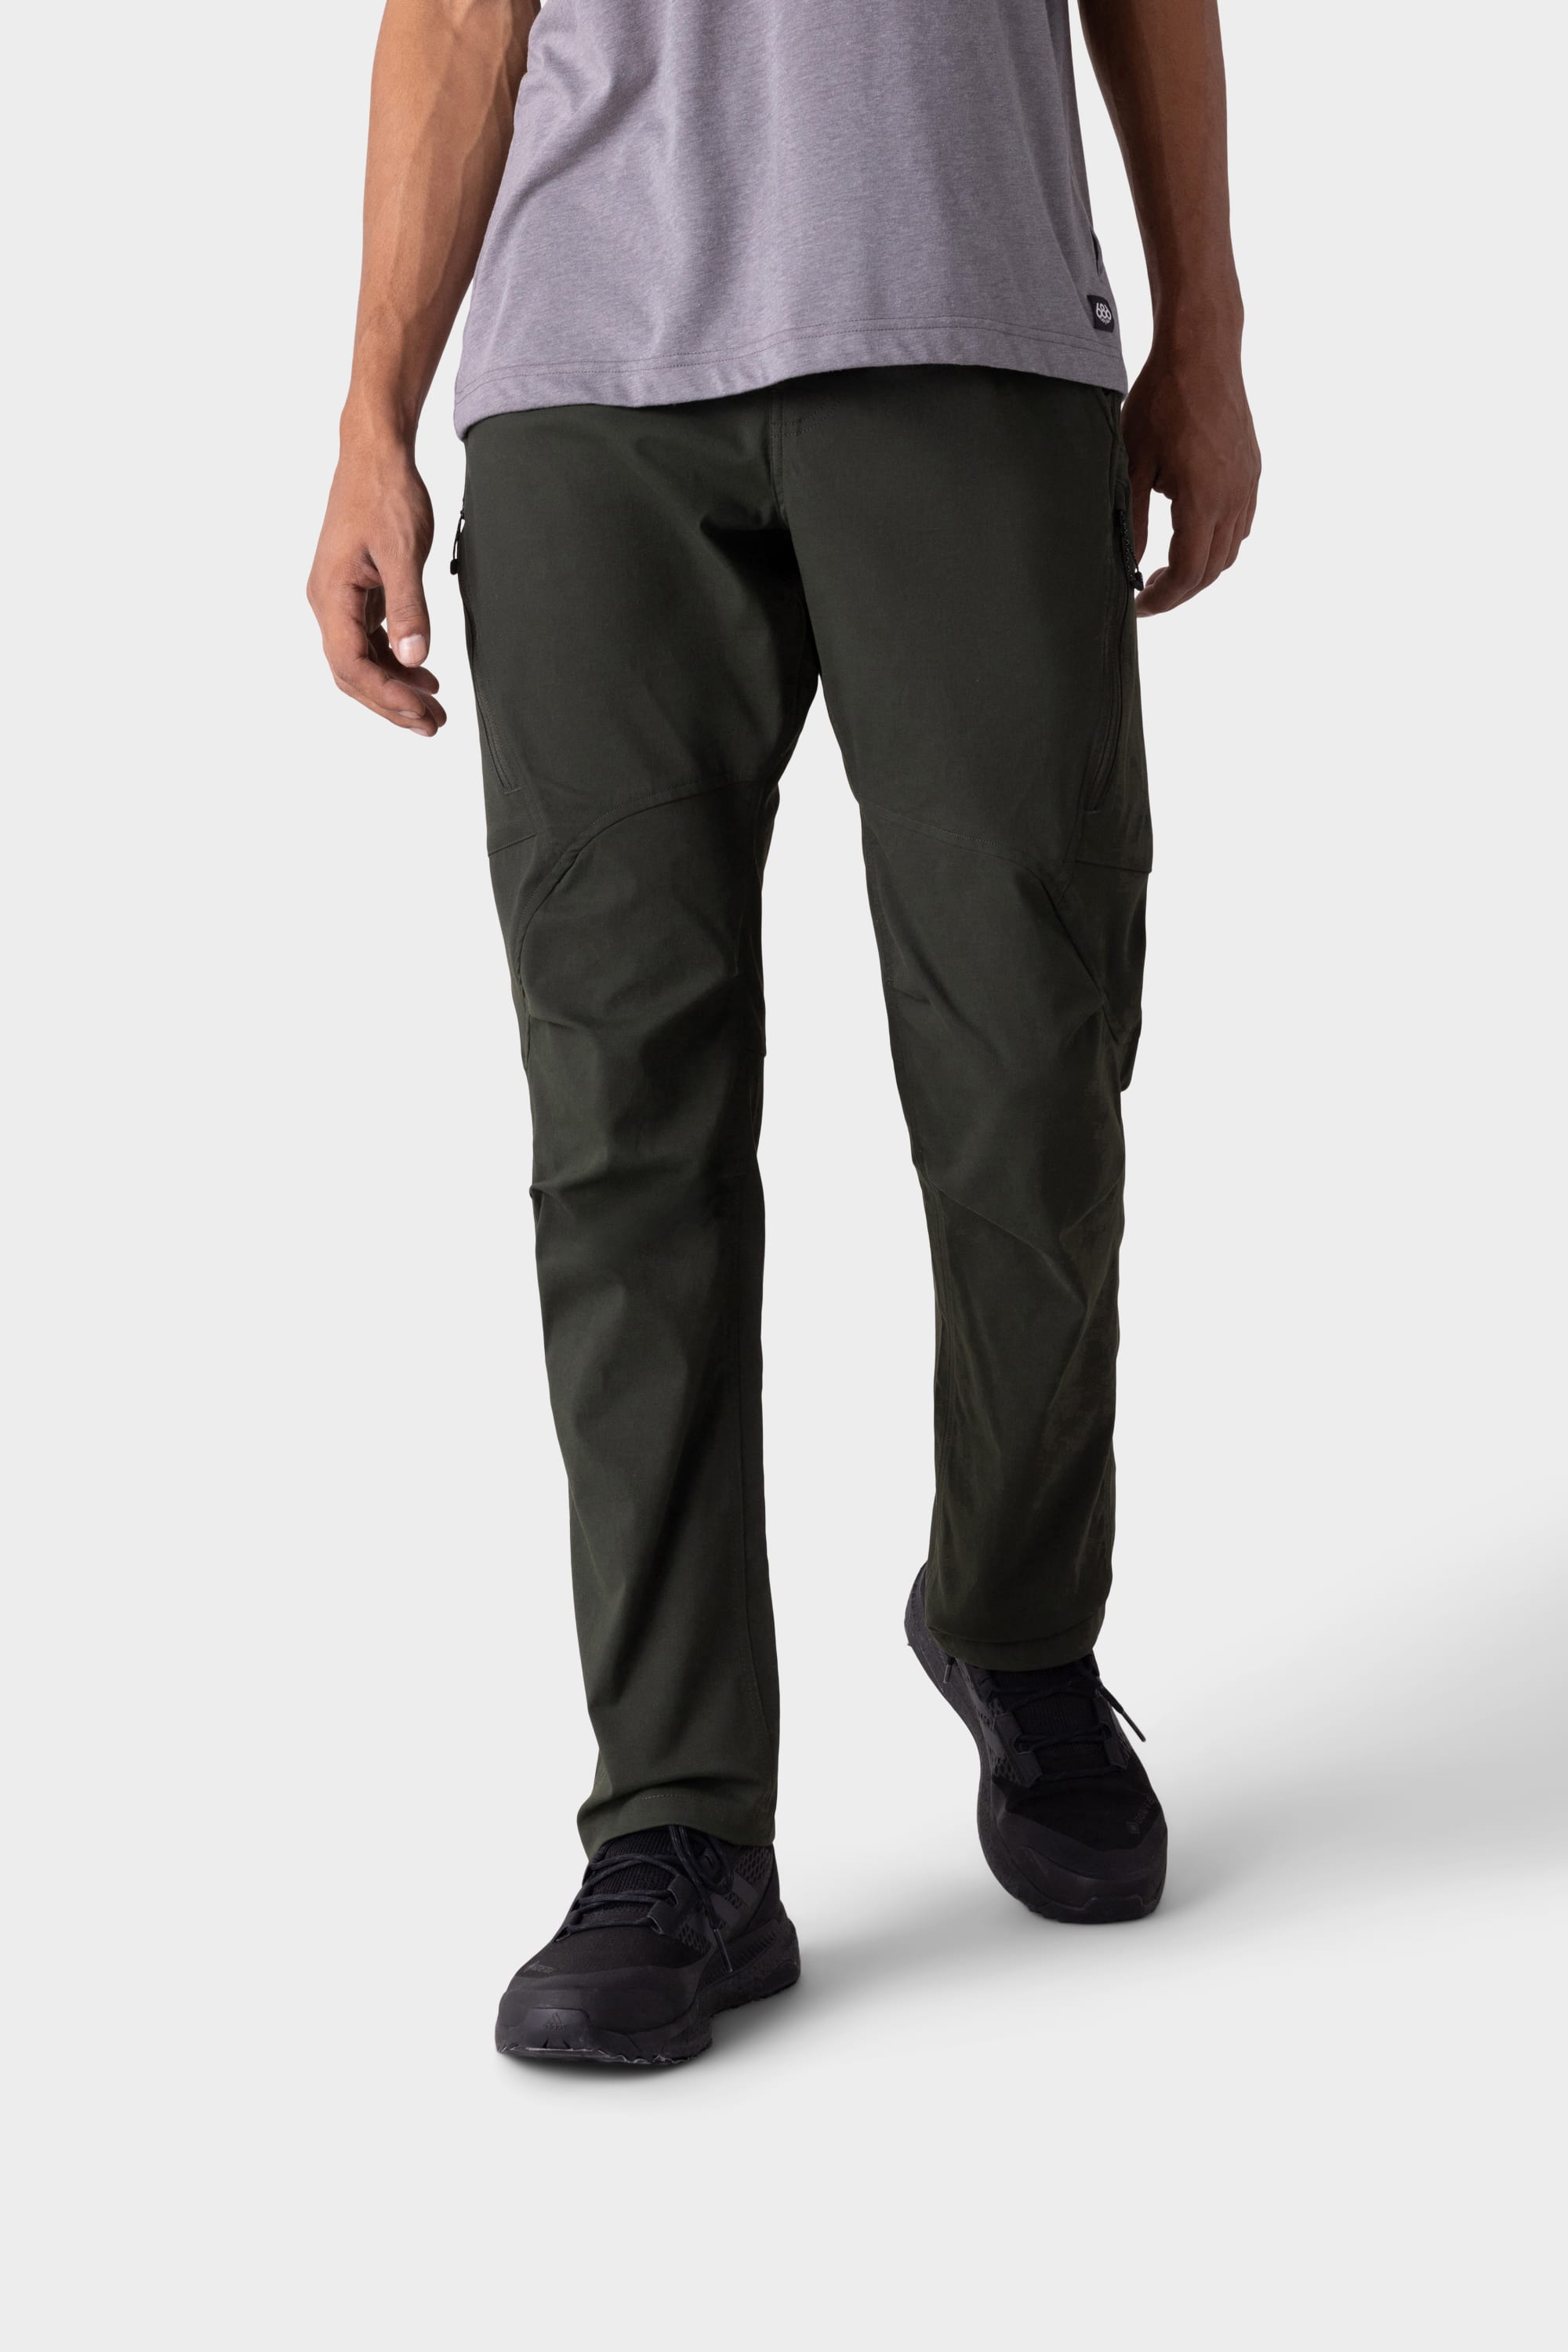 JohnBlairFlex Relaxed-Fit 7-Pocket Cargo Pants